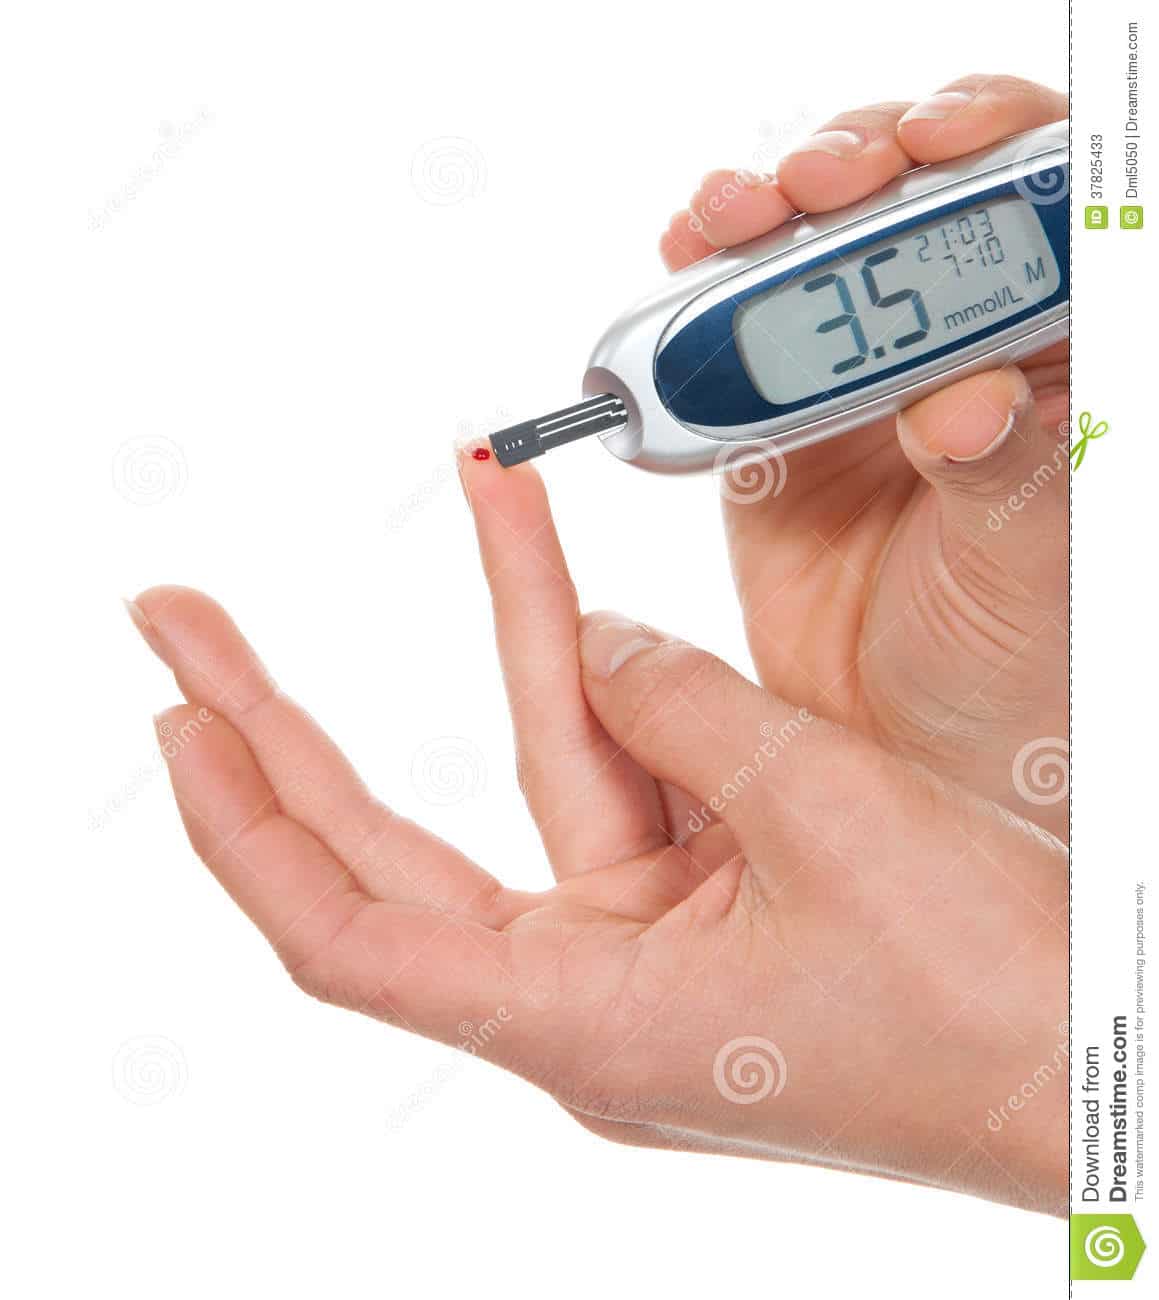 Measuring Glucose Level Blood Test Stock Image